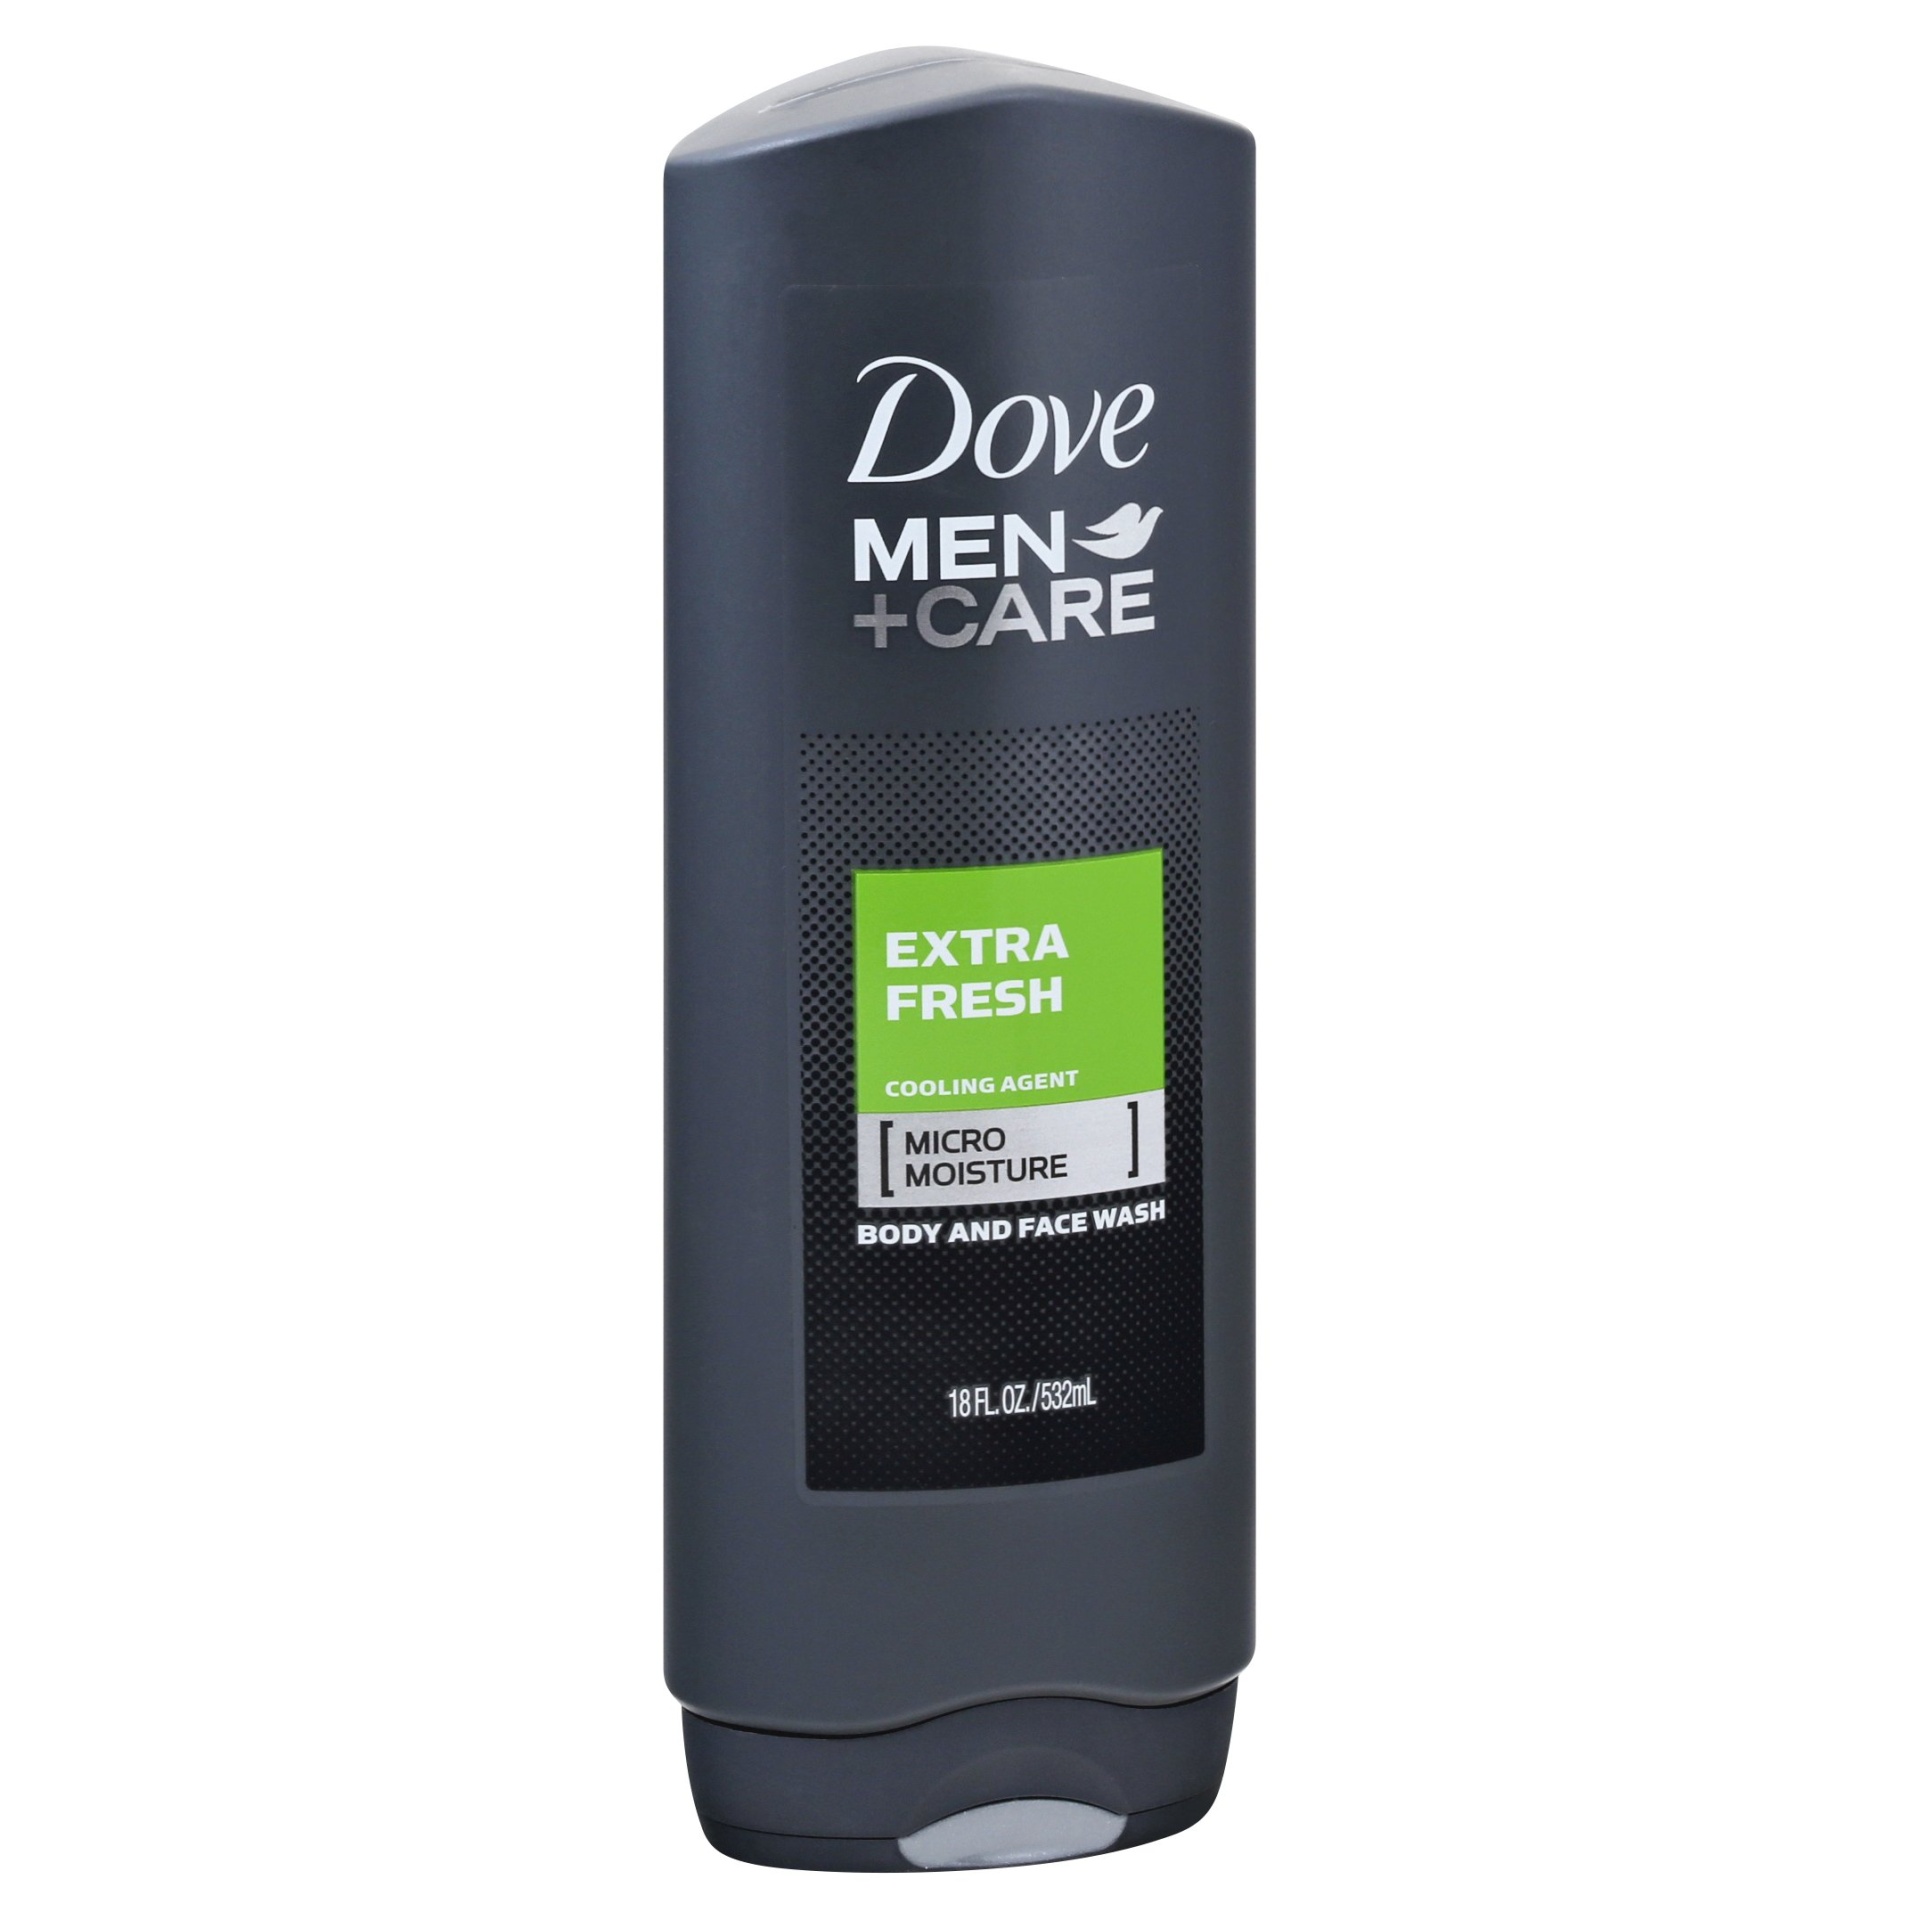 Dove Men+Care Extra Fresh Body and Face Wash 18 fl oz | Shipt